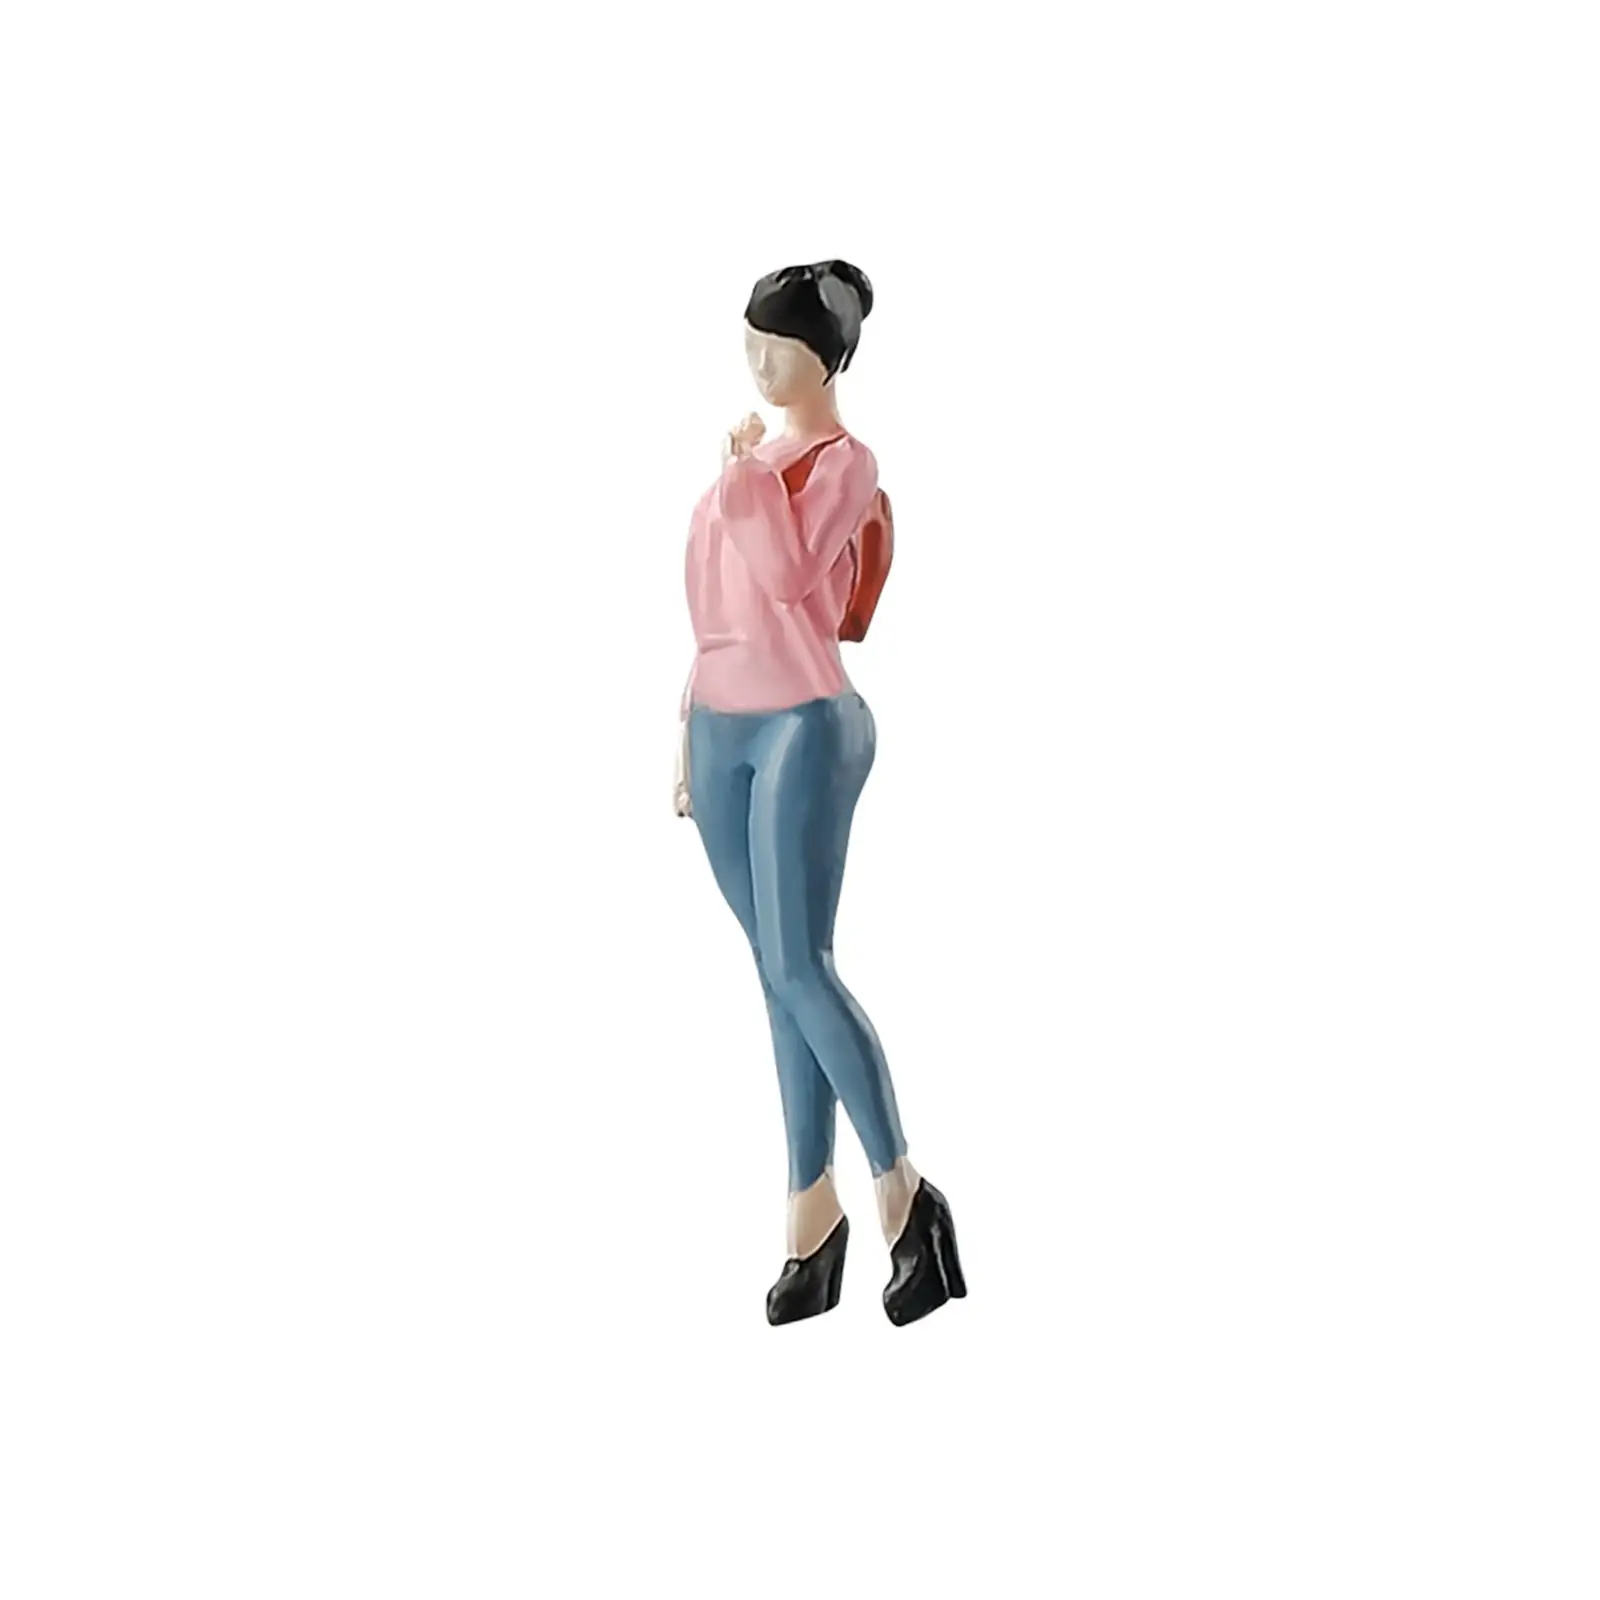 Resin 1/64 Girl Figures Movie Props 1/64 Model Girl Figures for DIY Scene Decor Diorama Layout Dollhouse Decor Desktop Ornament